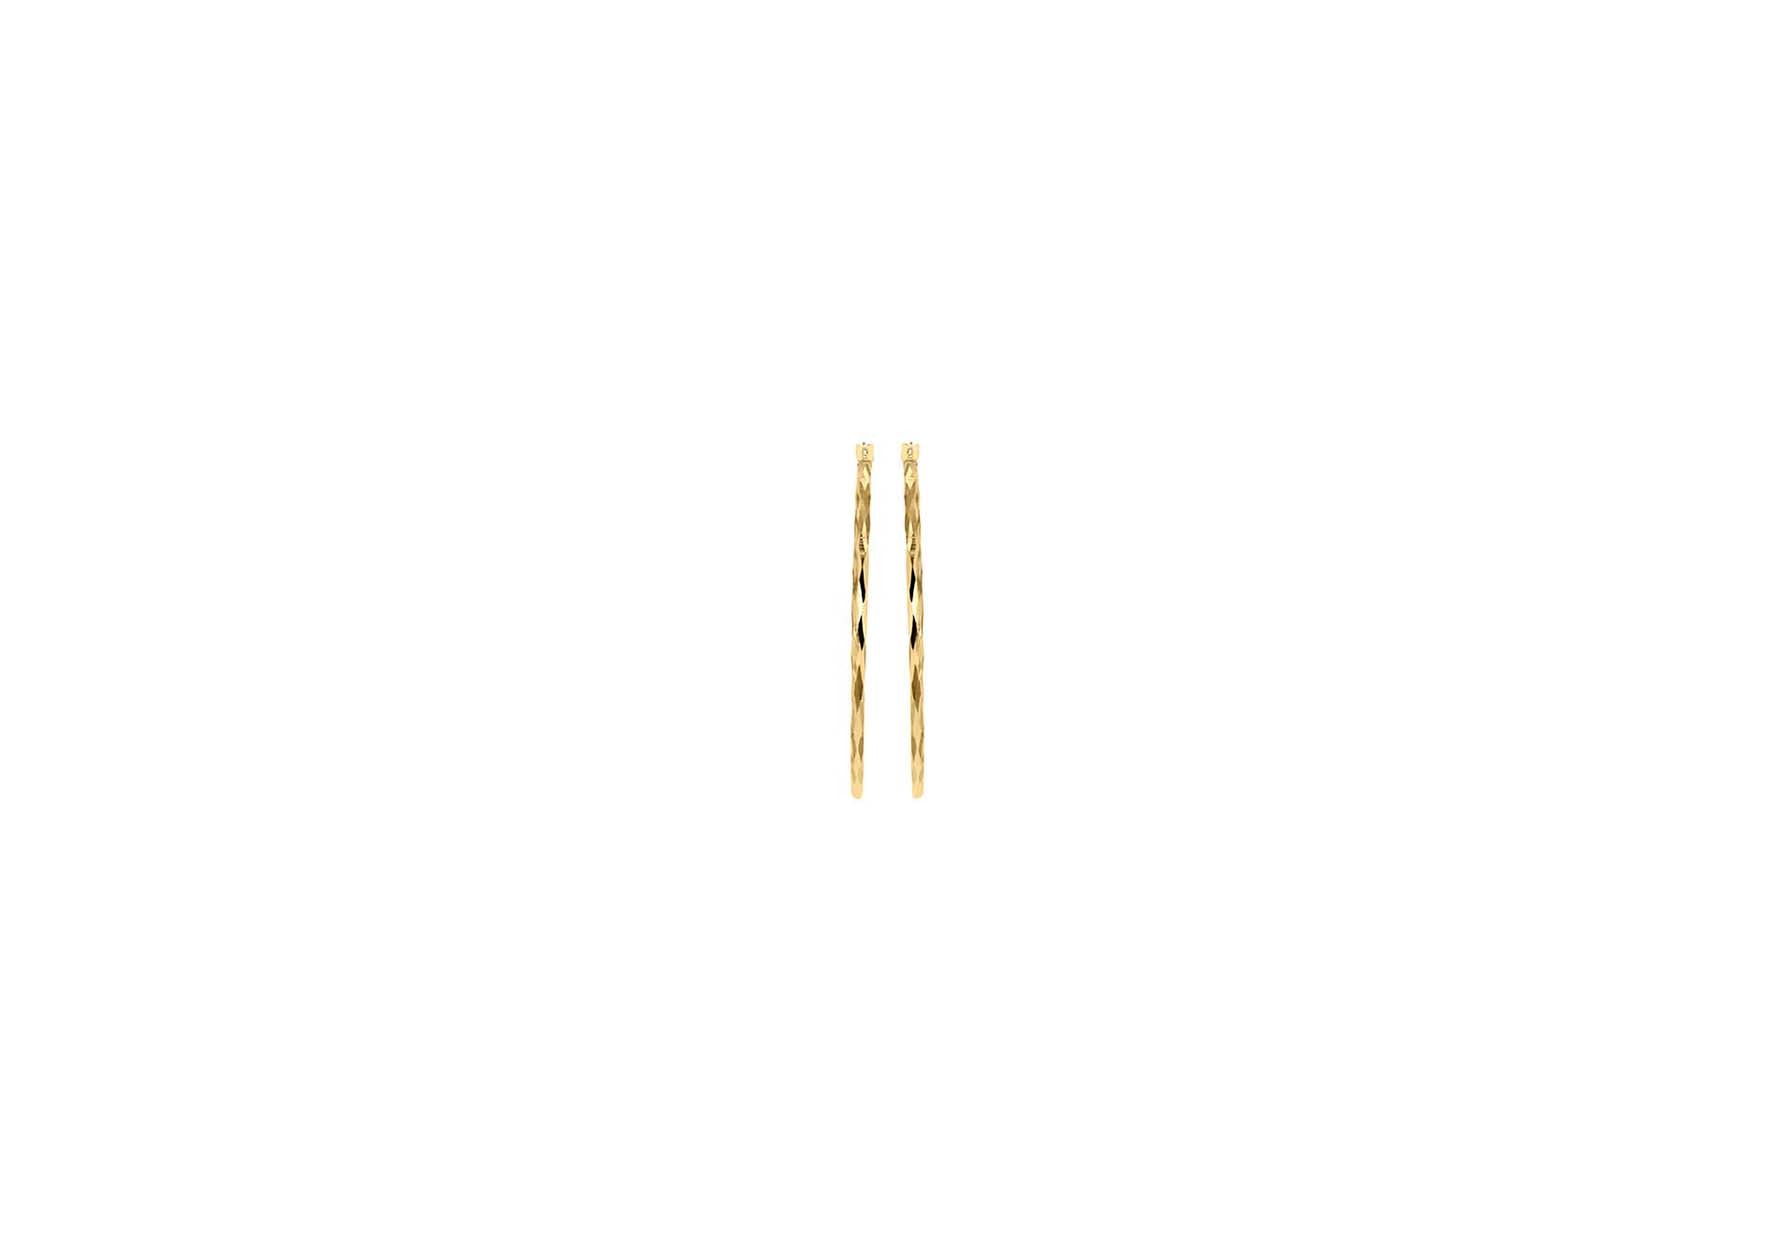 9ct Yellow Gold Diamond Cut Hoop Earrings 28mm